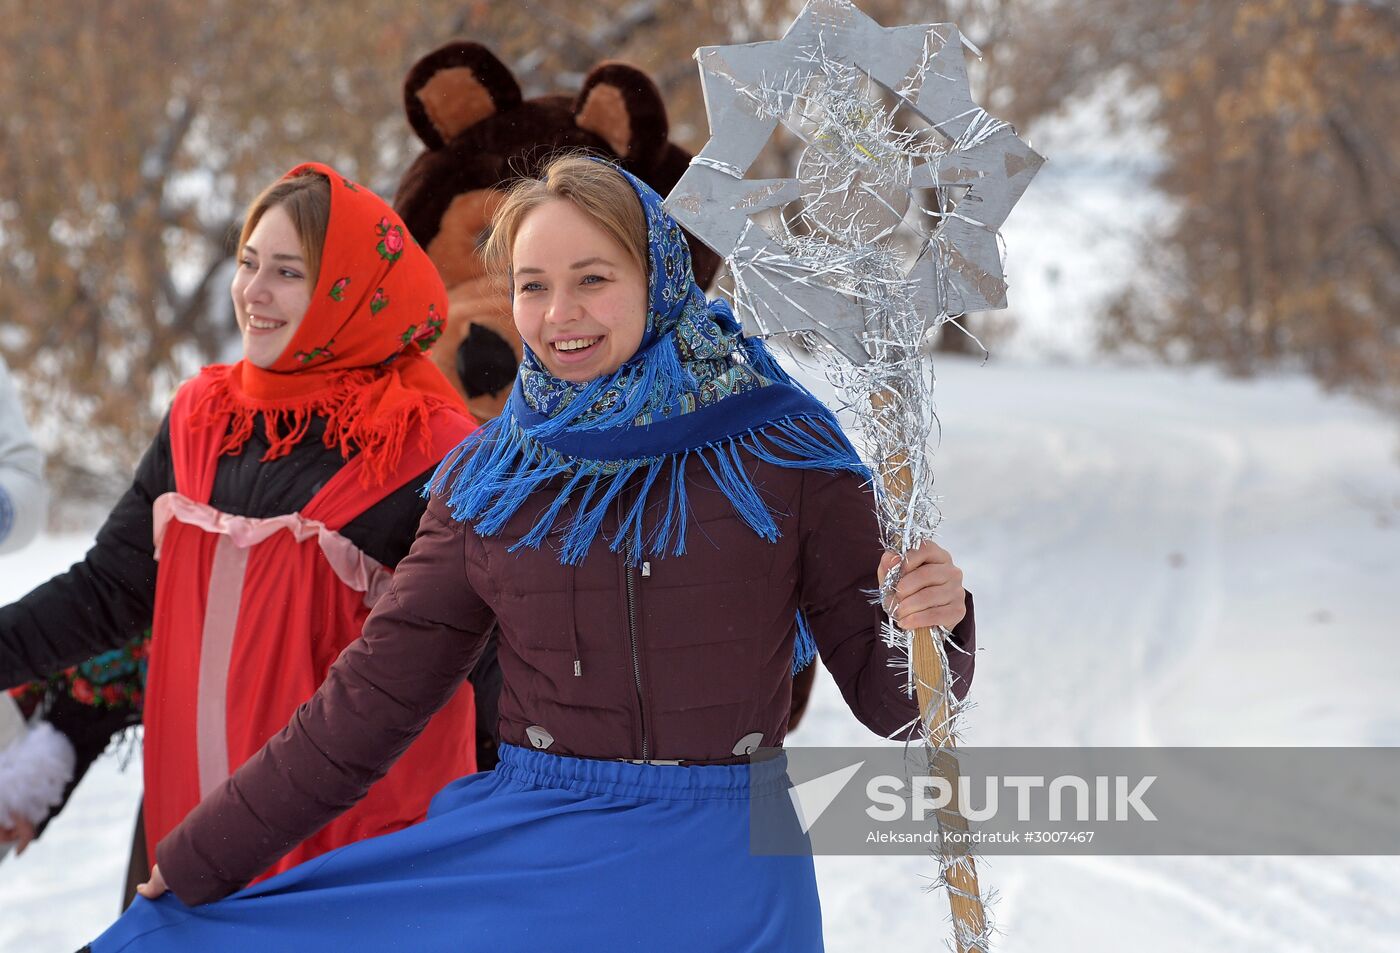 Christmas fortune telling and carol singing in Chelyabinsk Region